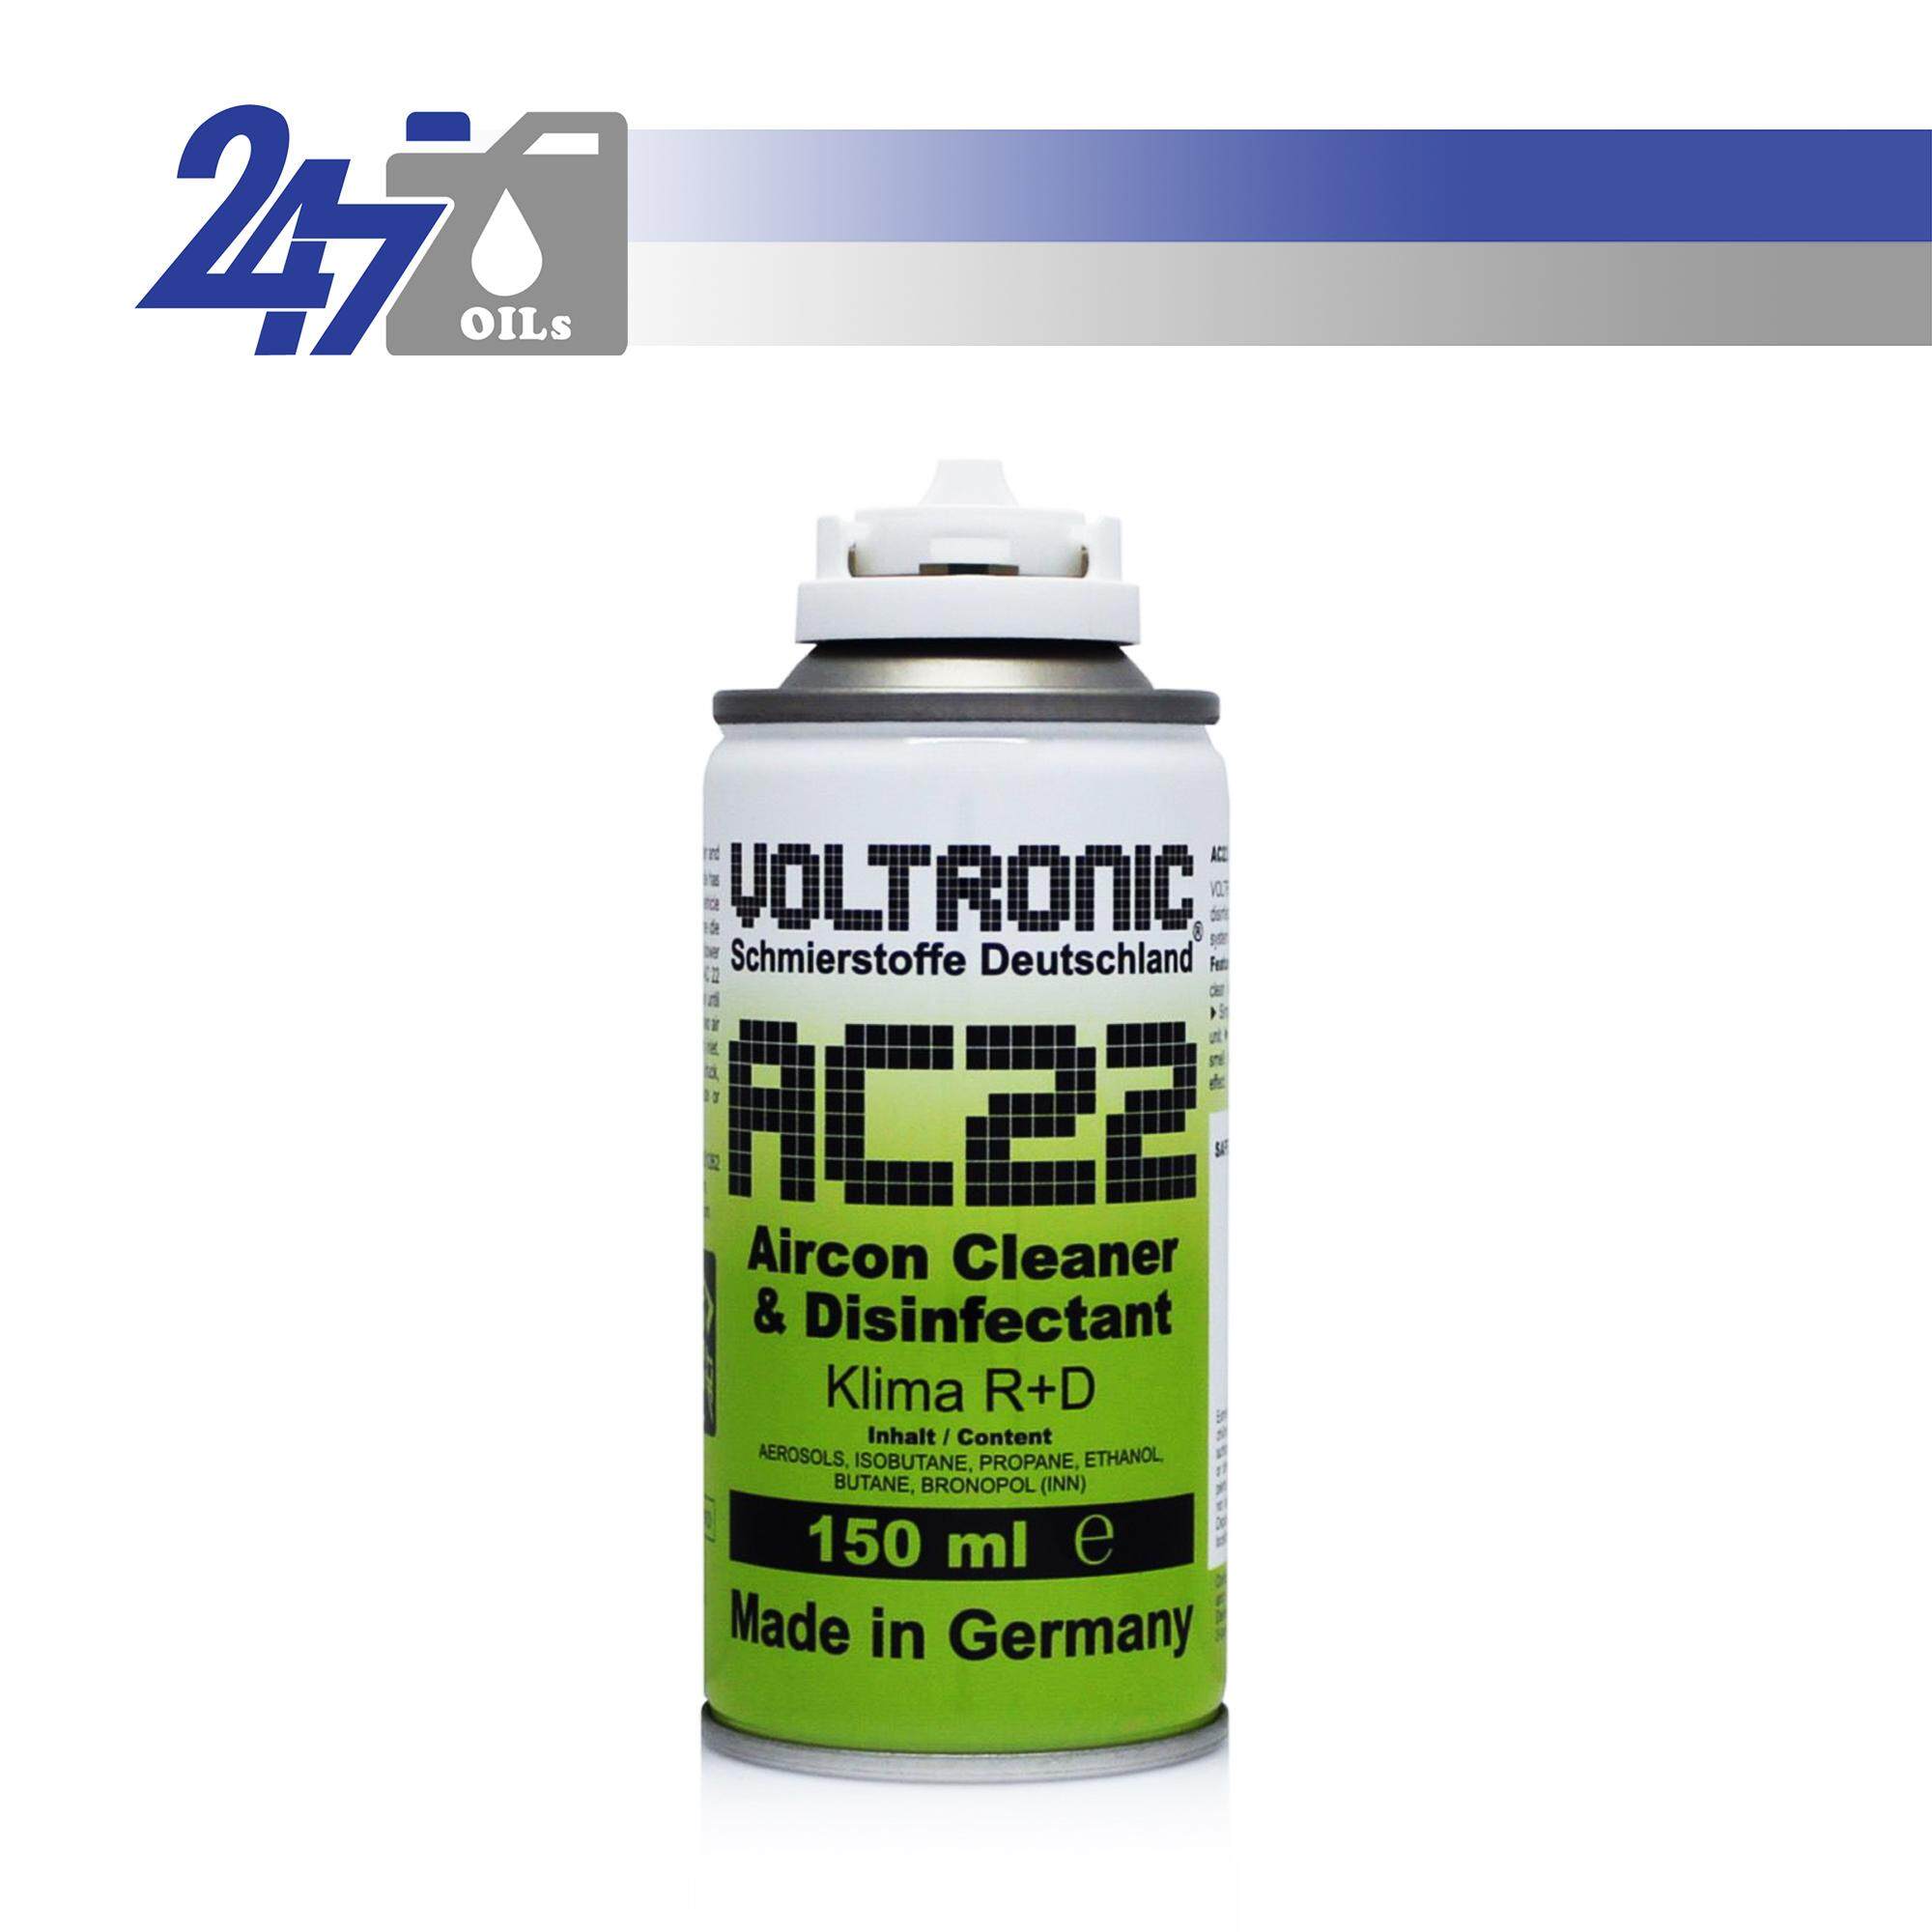 VOLTRONIC สเปรย์ปรับอากาศ AC22 ทำความสะอาด ขจัดกลิ่น และกำจัดเชื้อแบคทีเรีย ในรถยนต์ และในบ้าน